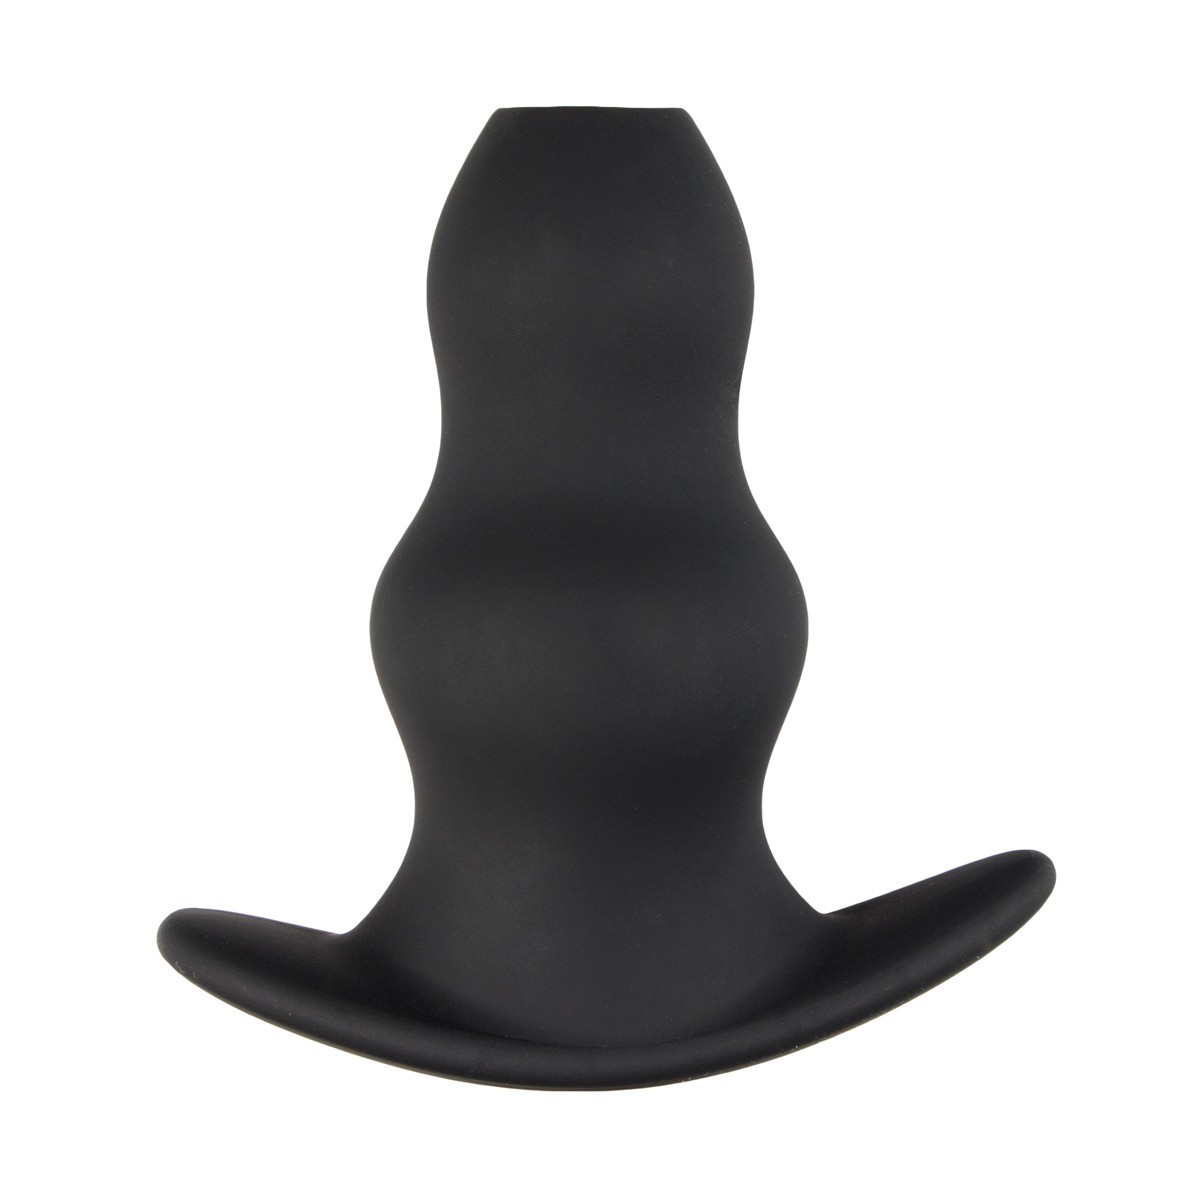 Sinner Gear Hollow Silicone Butt Plug Medium, černý dutý anální kolík 14 x 4–6,1 cm